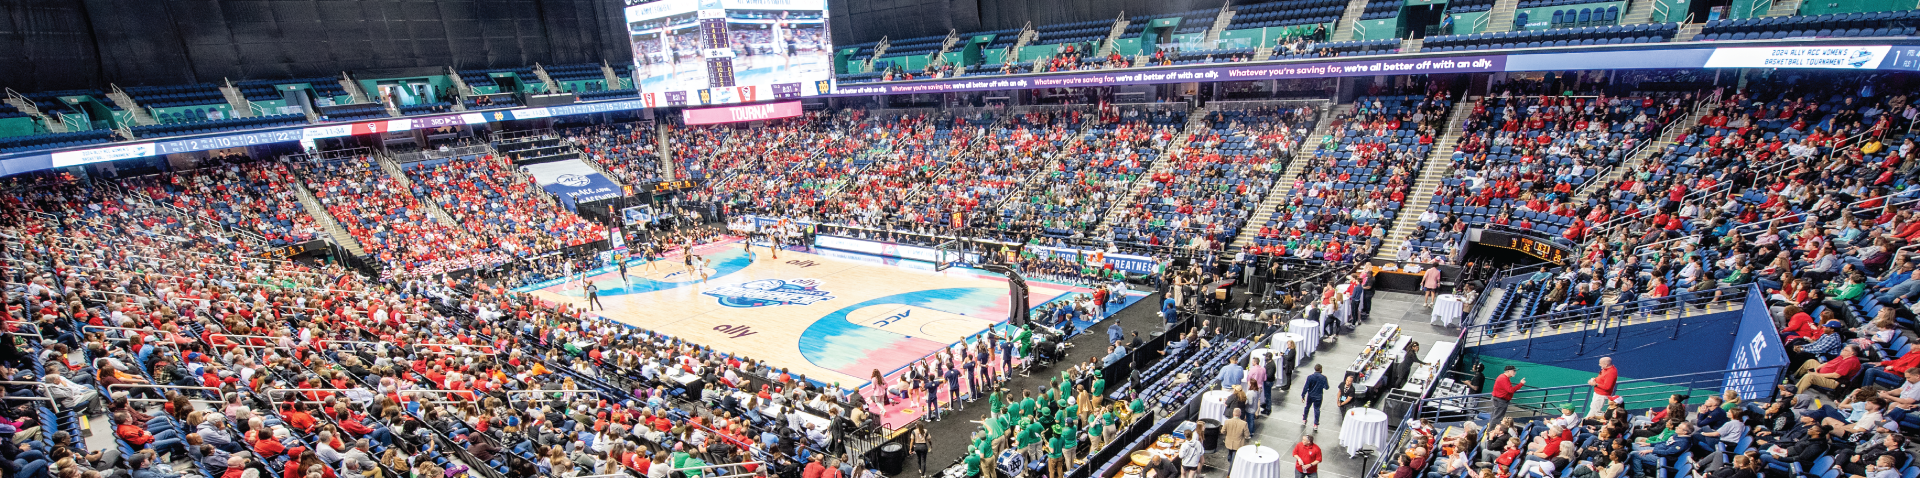 Greensboro Coliseum Filled Arena